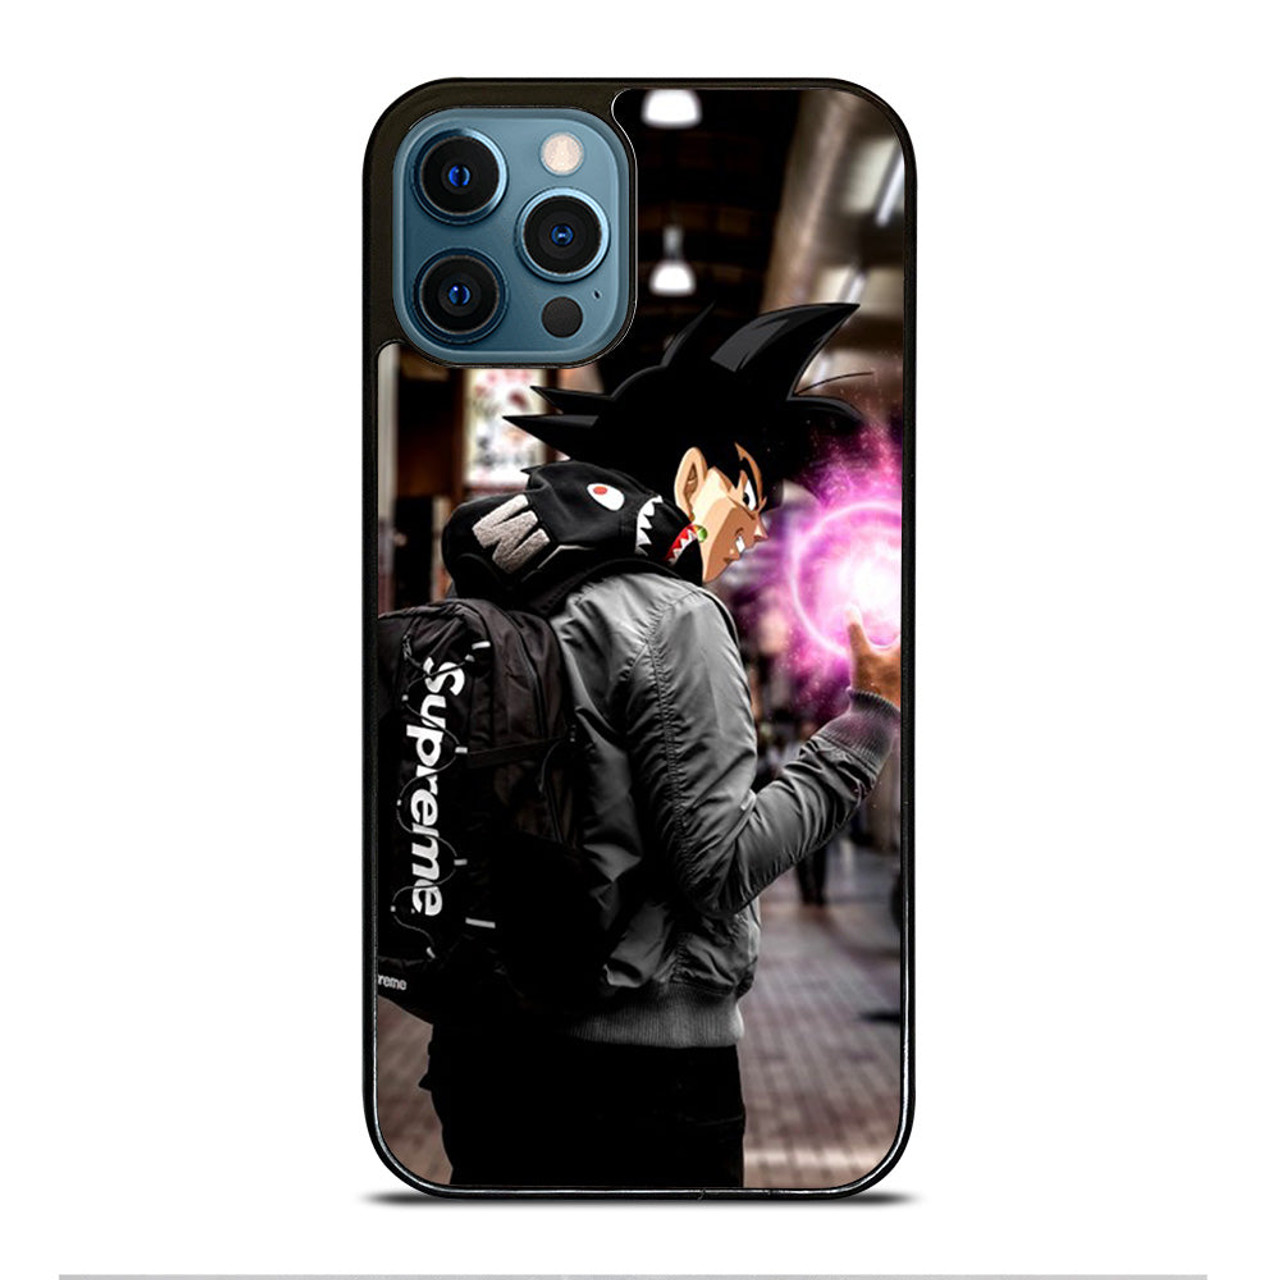 Black Goku Supreme Iphone 12 Pro Max Case Cover